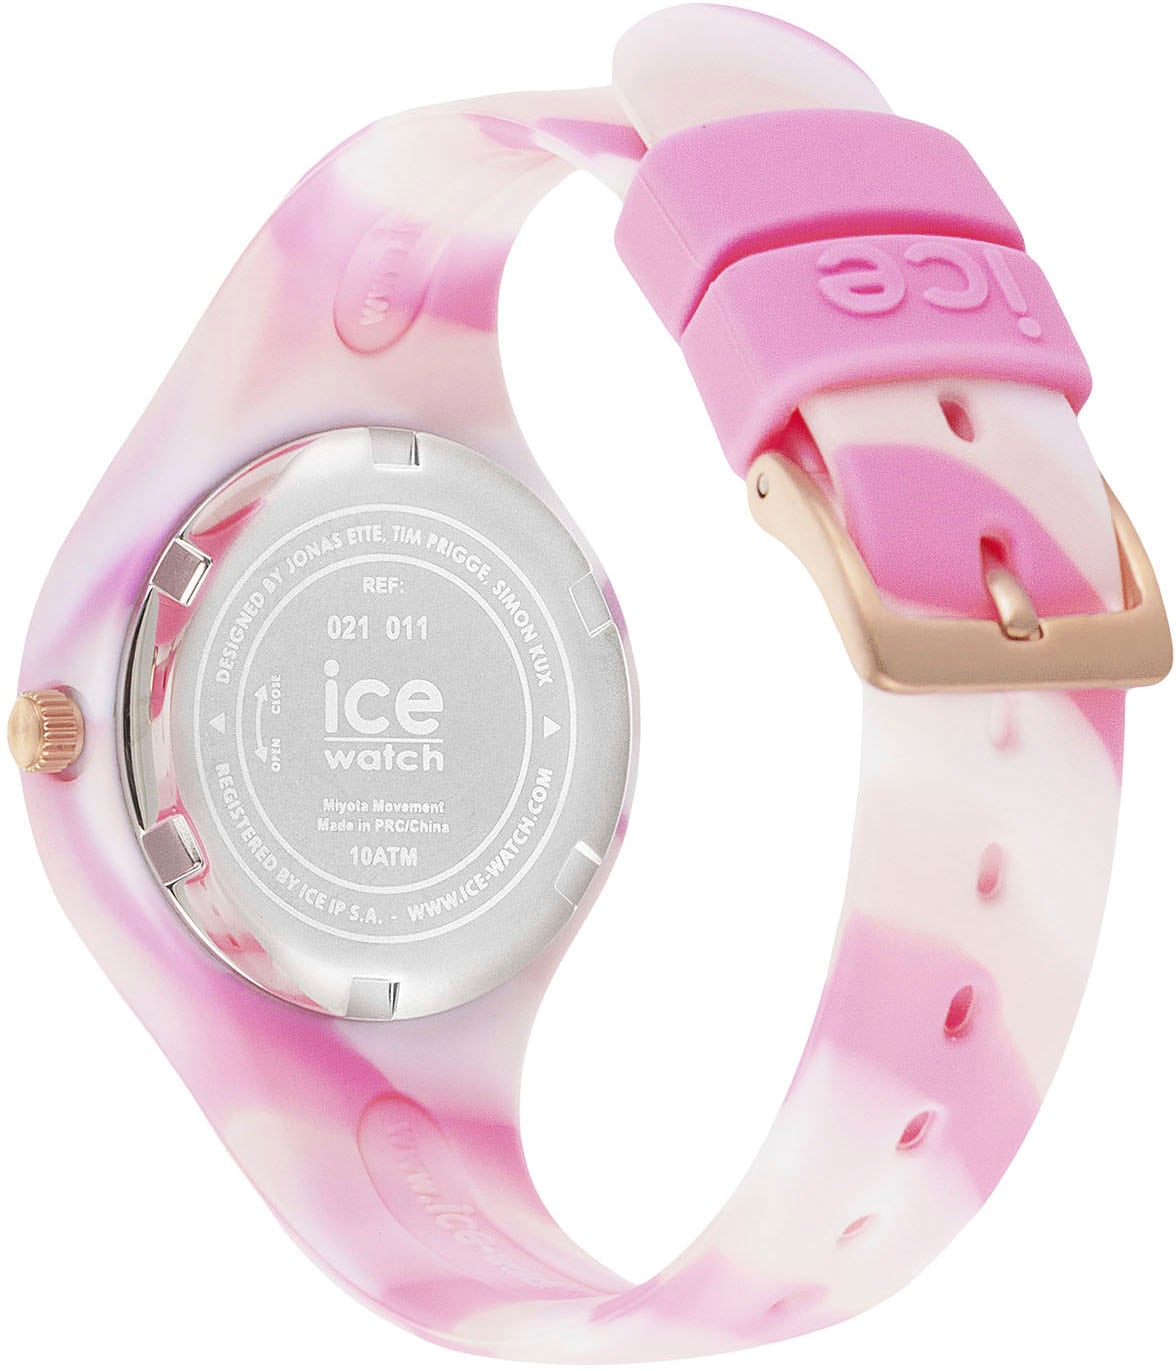 ice-watch »ICE - Geschenk auch Quarzuhr tie dye - ♕ 021011«, shades bei and als ideal 3H, Pink Extra-Small -